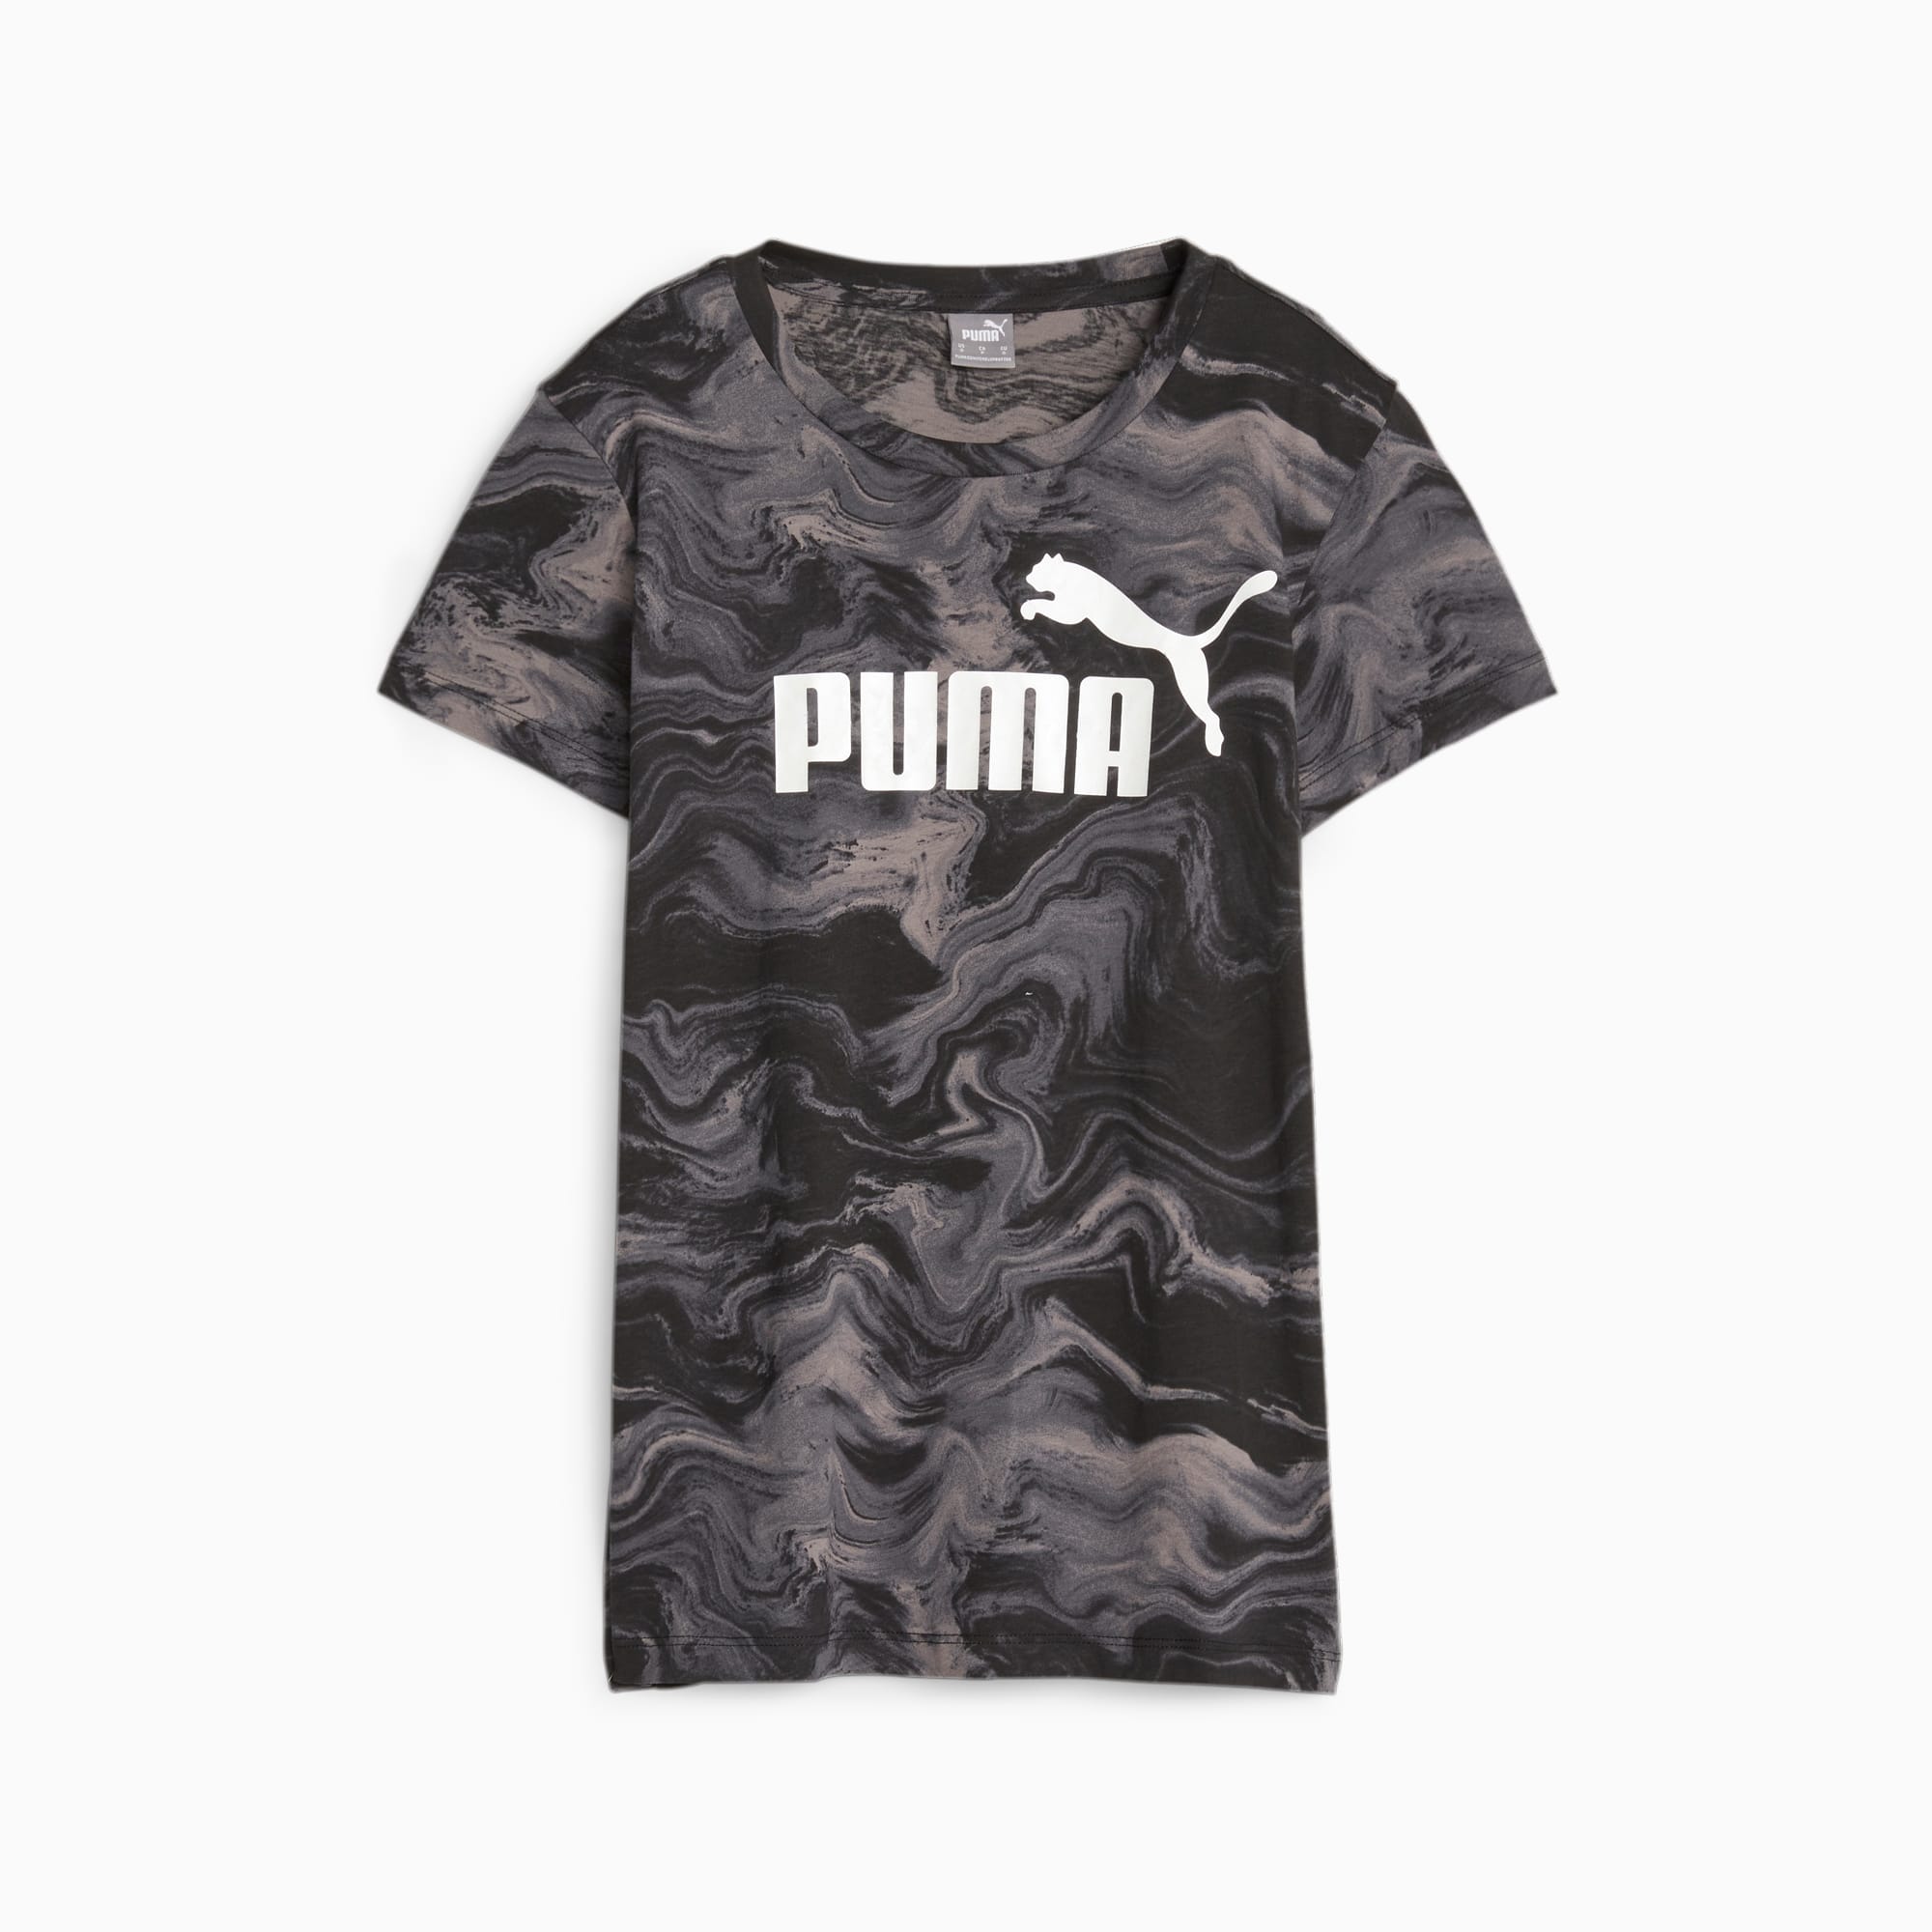 PUMA Ess+ Marbleized Women's T-Shirt, Black, Size S, Clothing